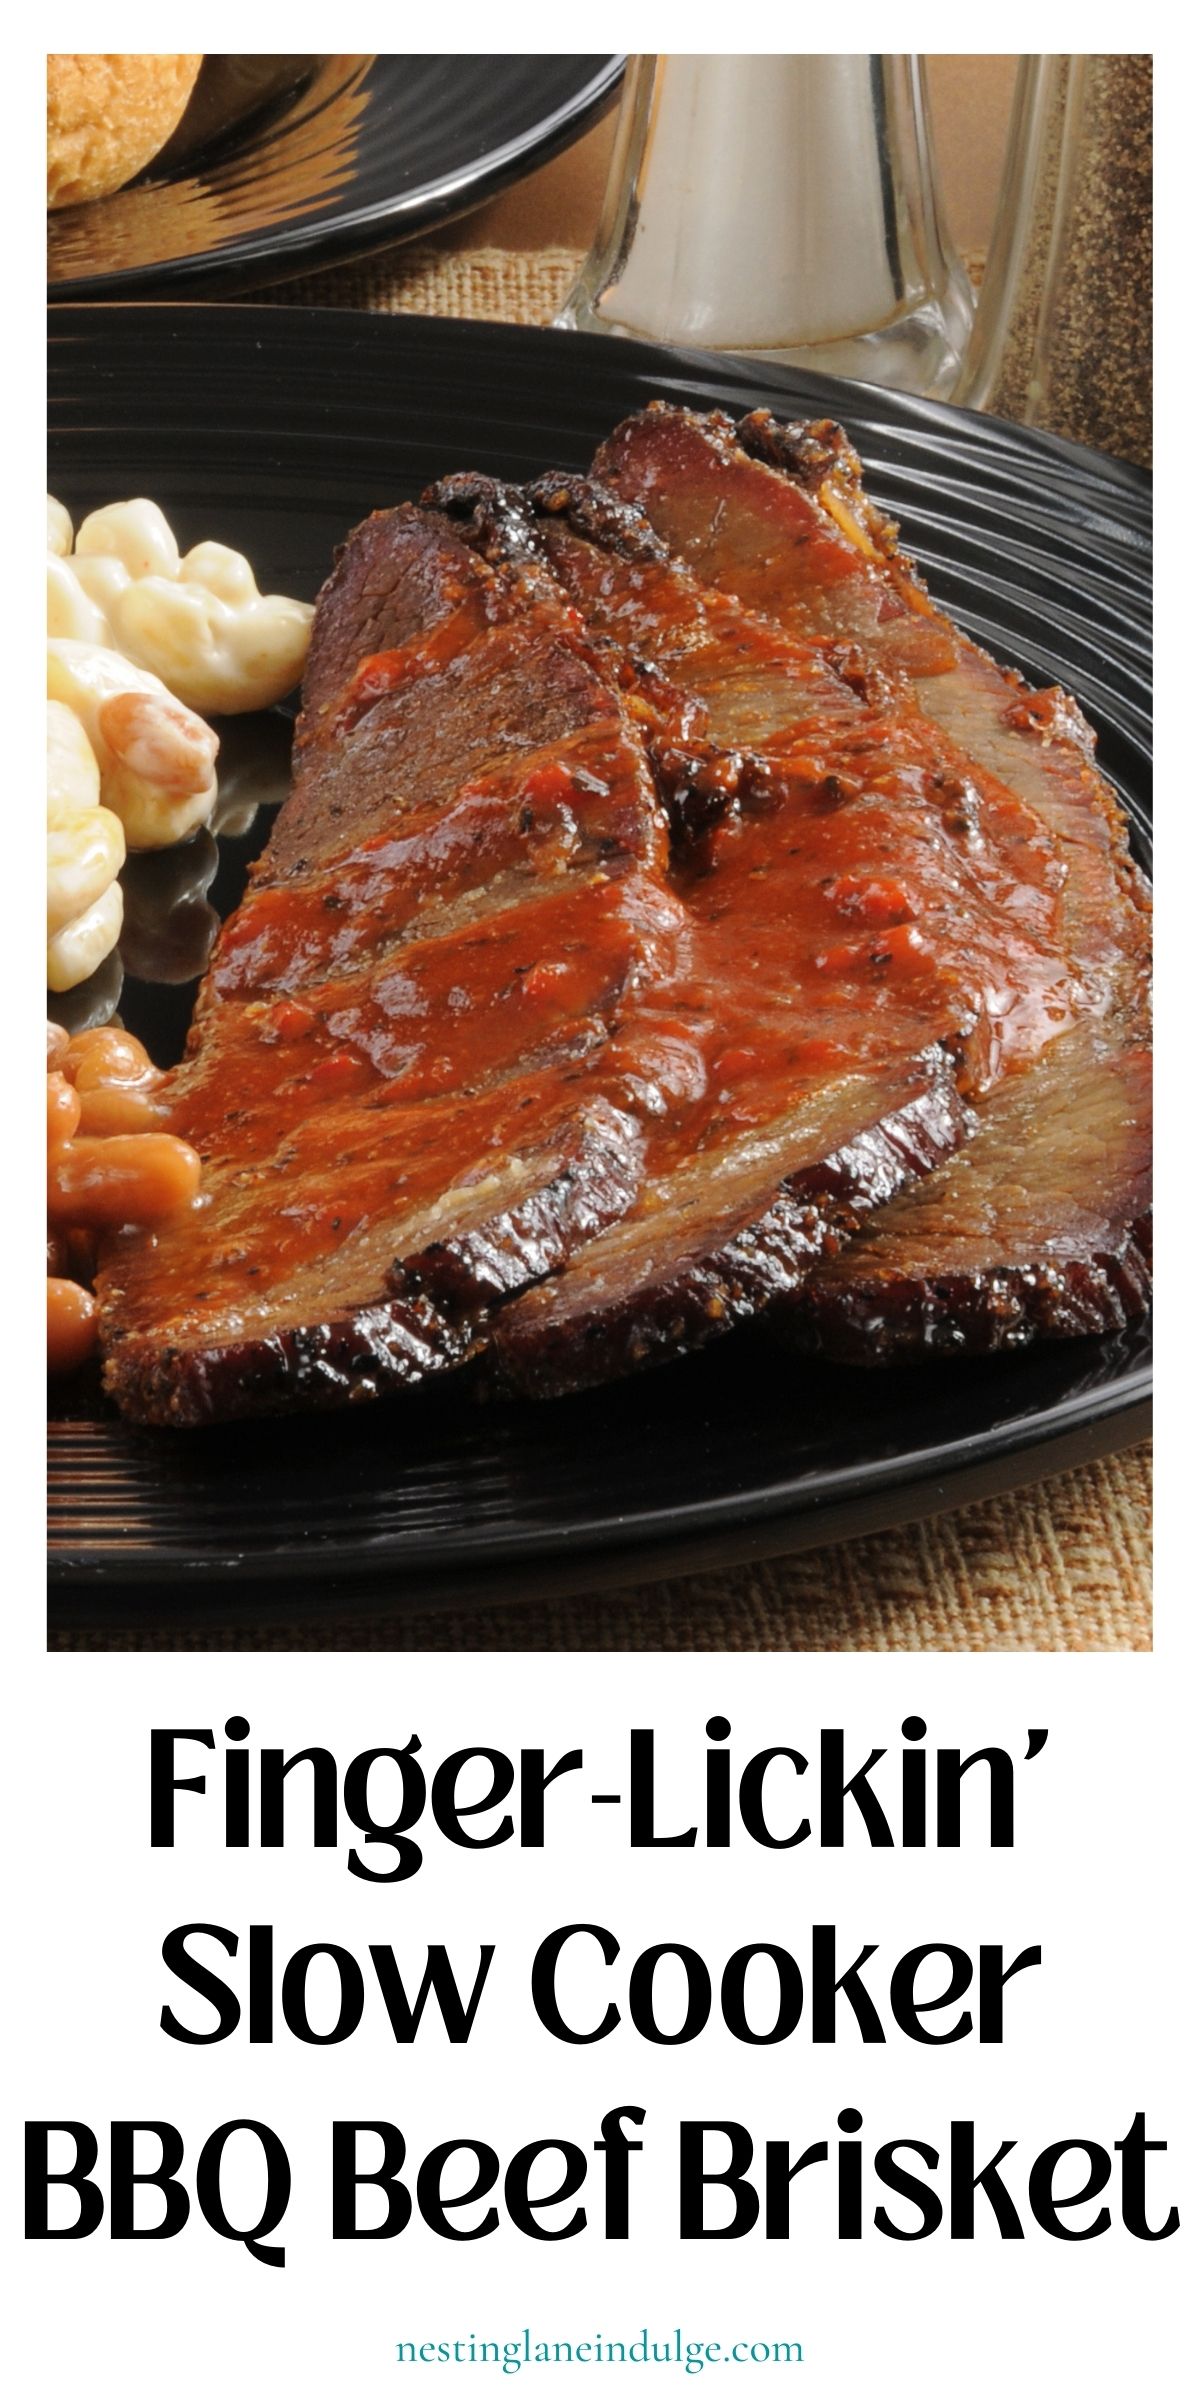 Finger-Lickin' Slow Cooker BBQ Beef Brisket Graphic.